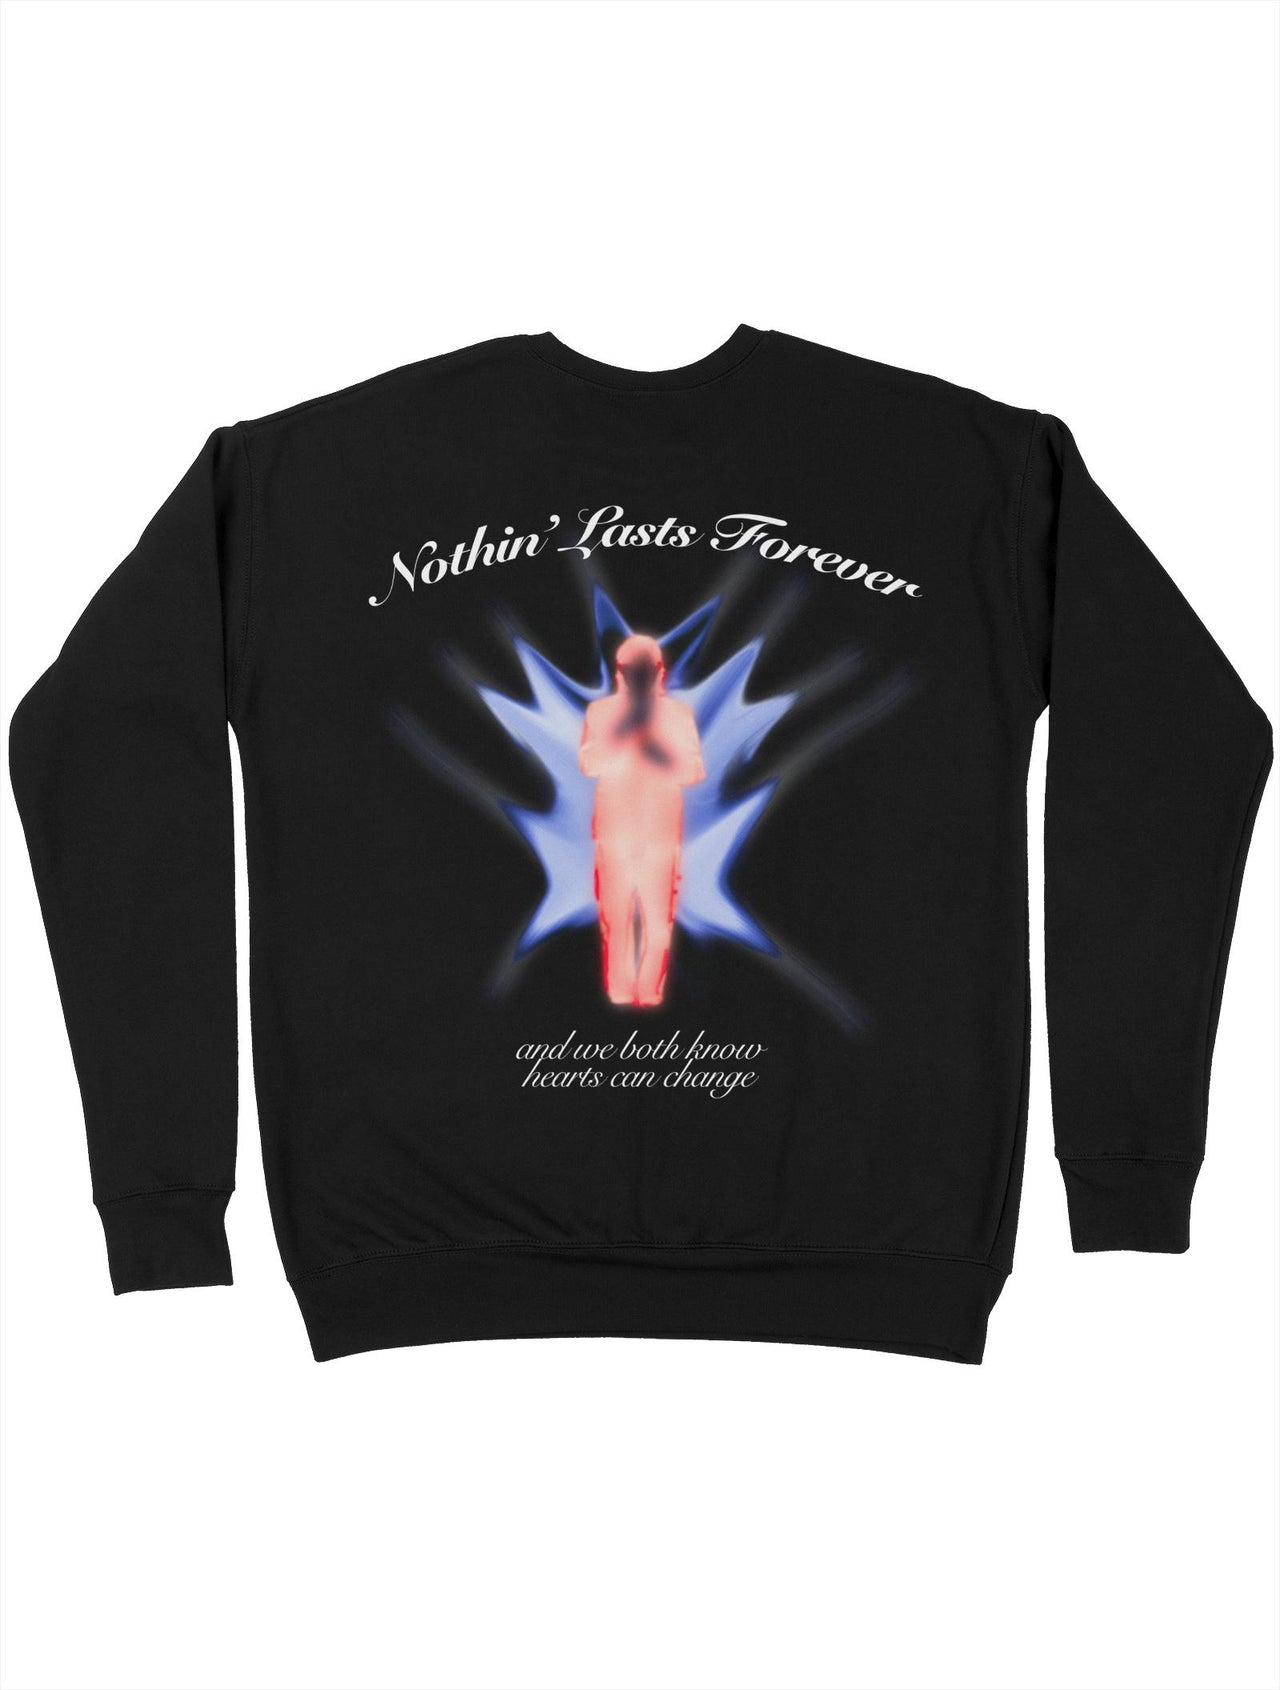 Nothin' Lasts Forever Sweatshirt